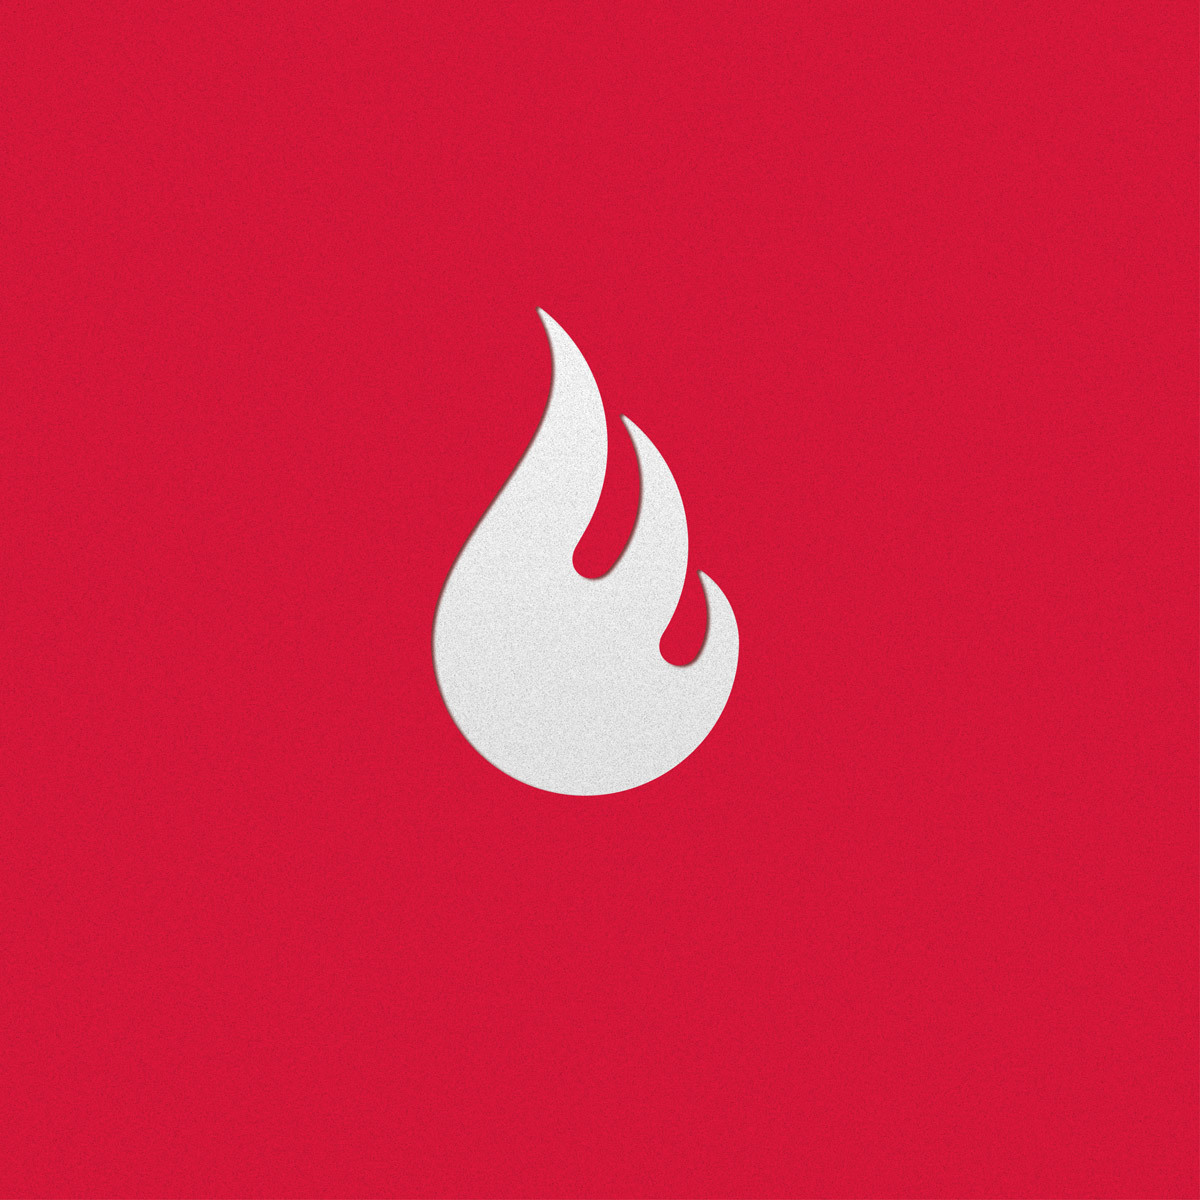 Wildfire Emblem MHG Bern / Grafikdesign